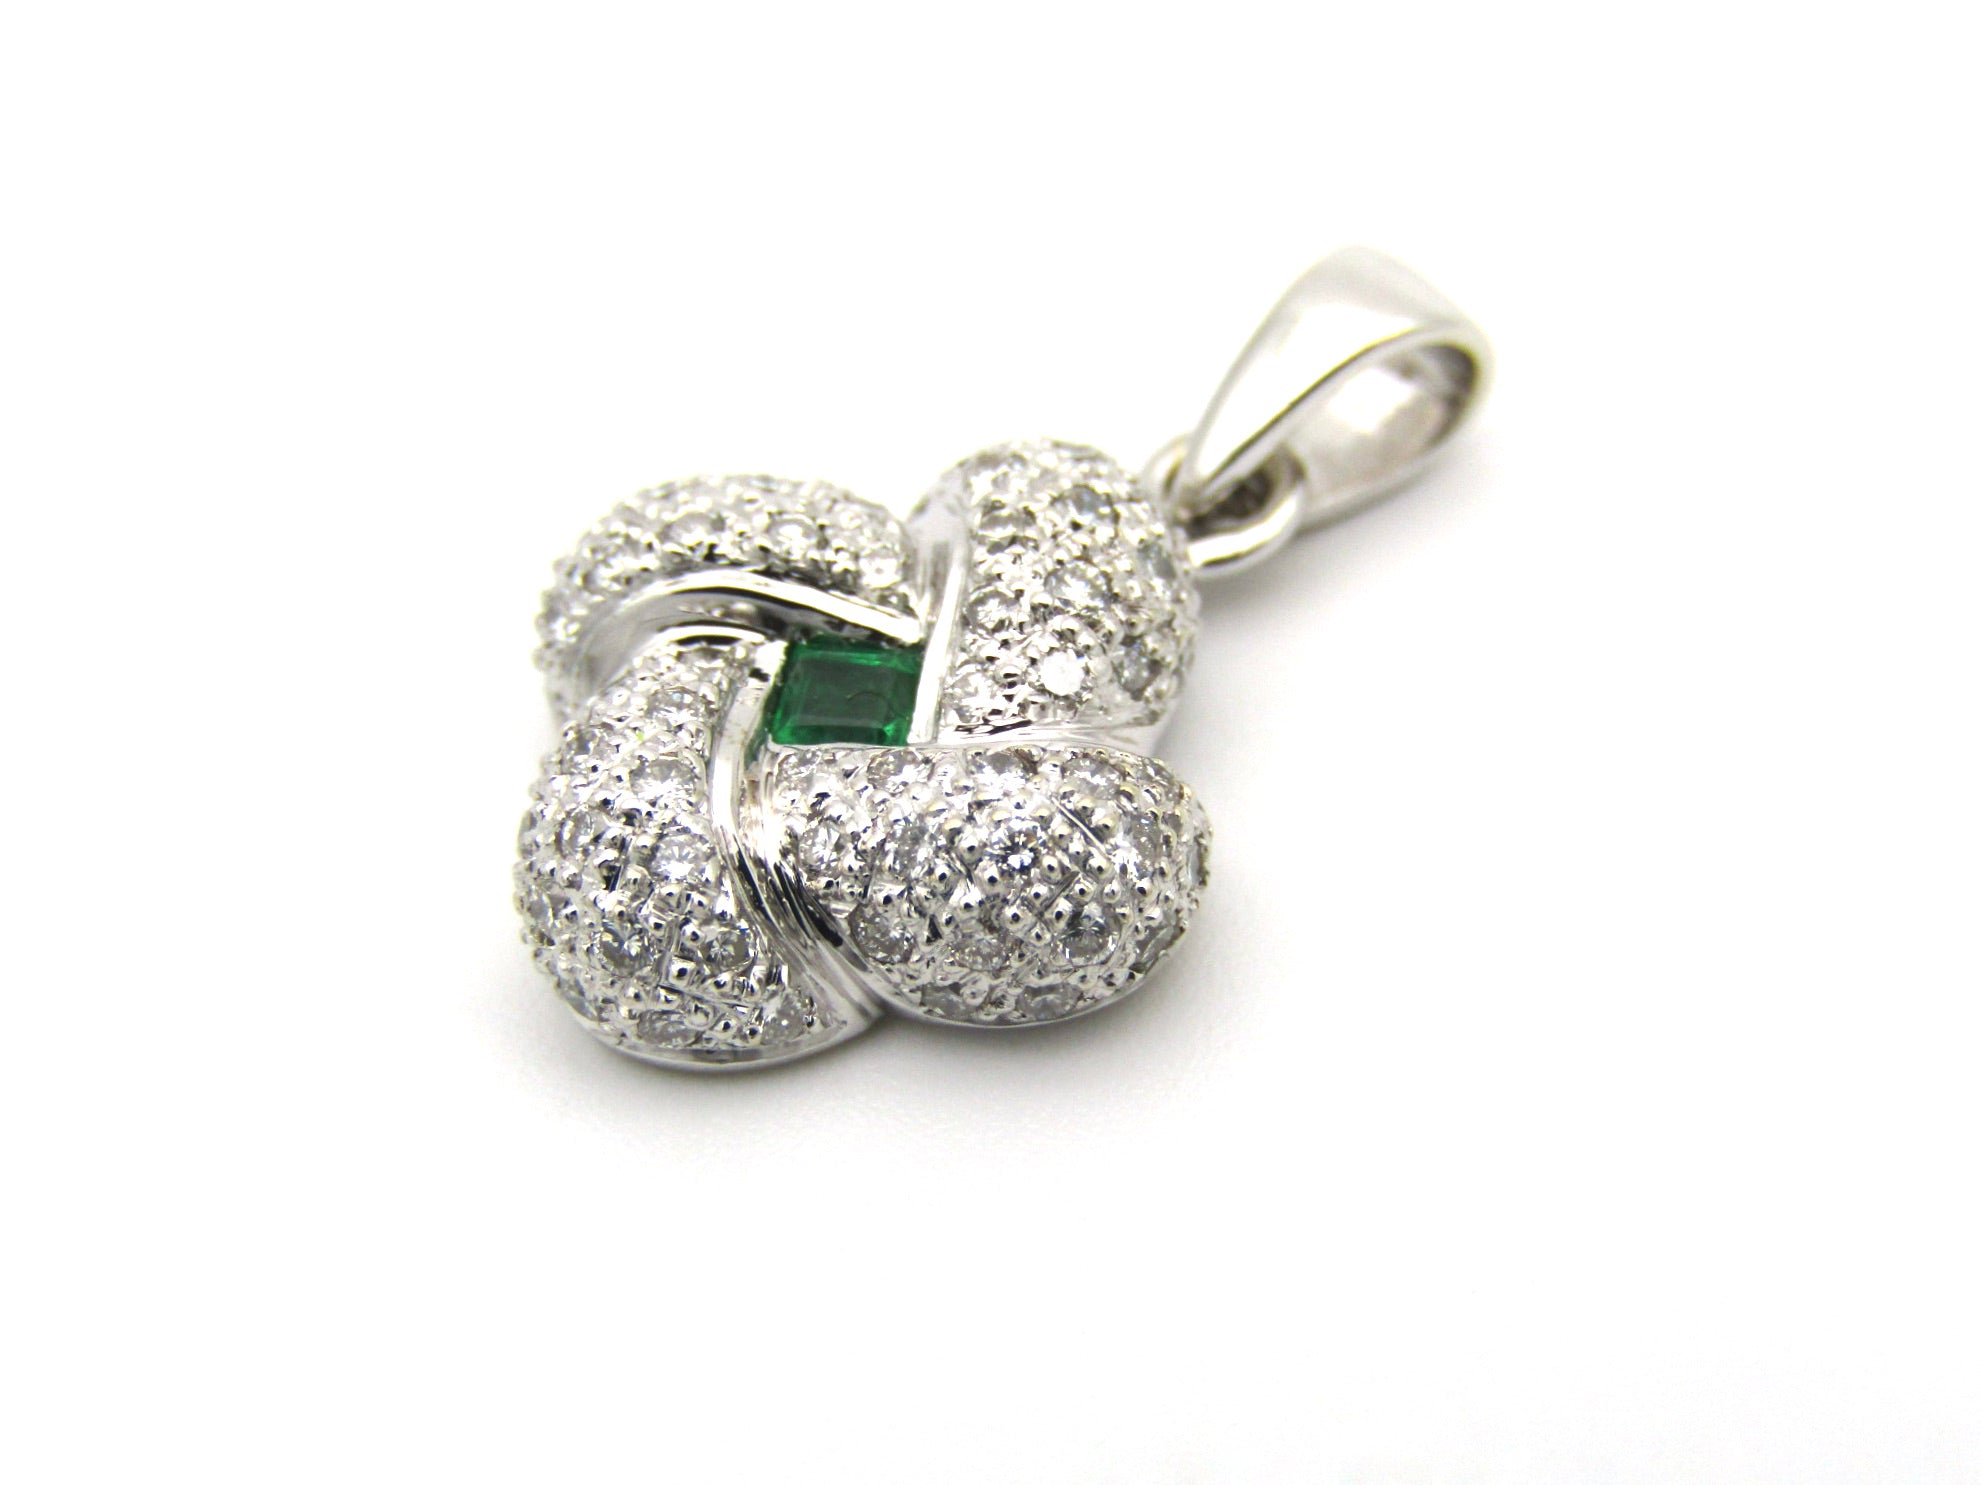 18K gold emerald and diamond pendant.